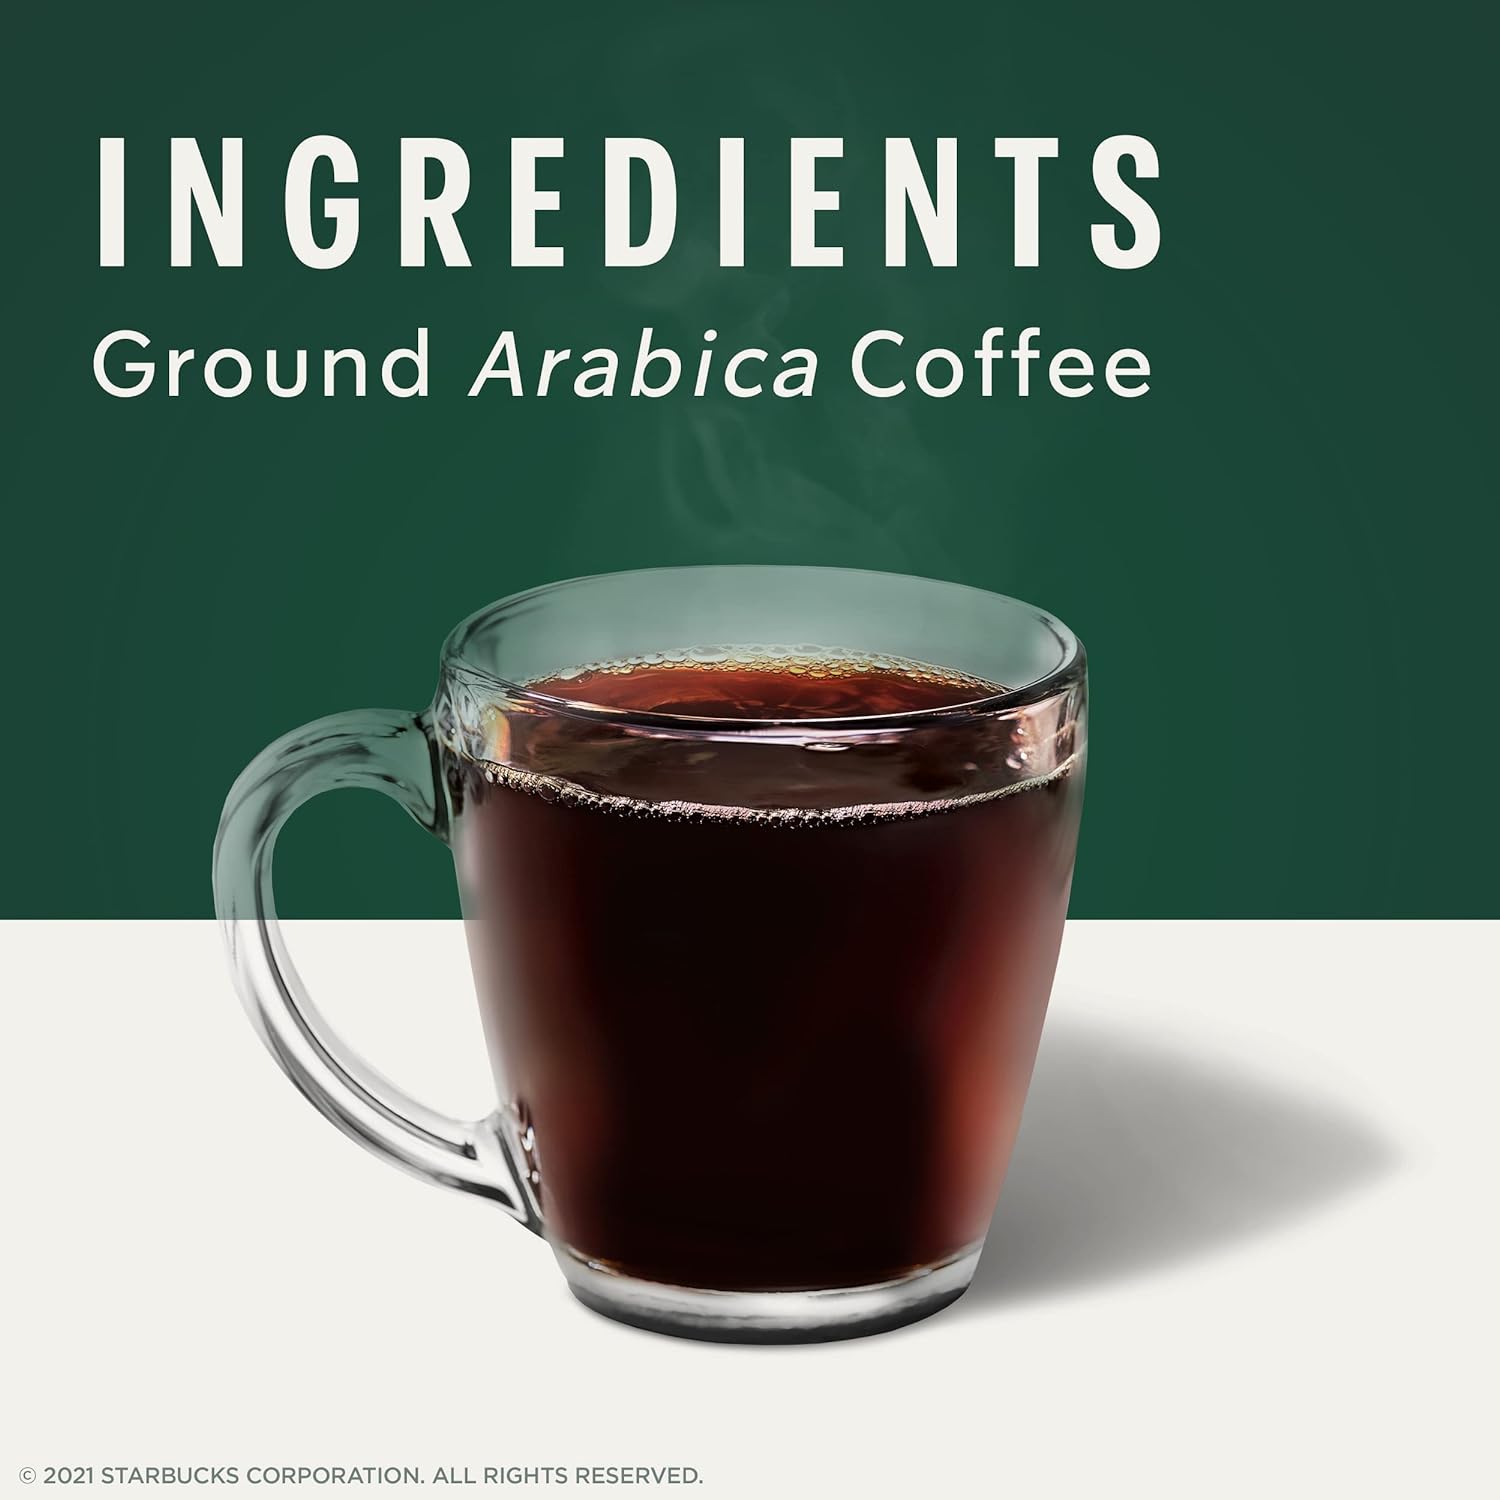 Starbucks Medium Roast Whole Bean Coffee — Breakfast Blend — 100% Arabica — 1 bag (18 oz)